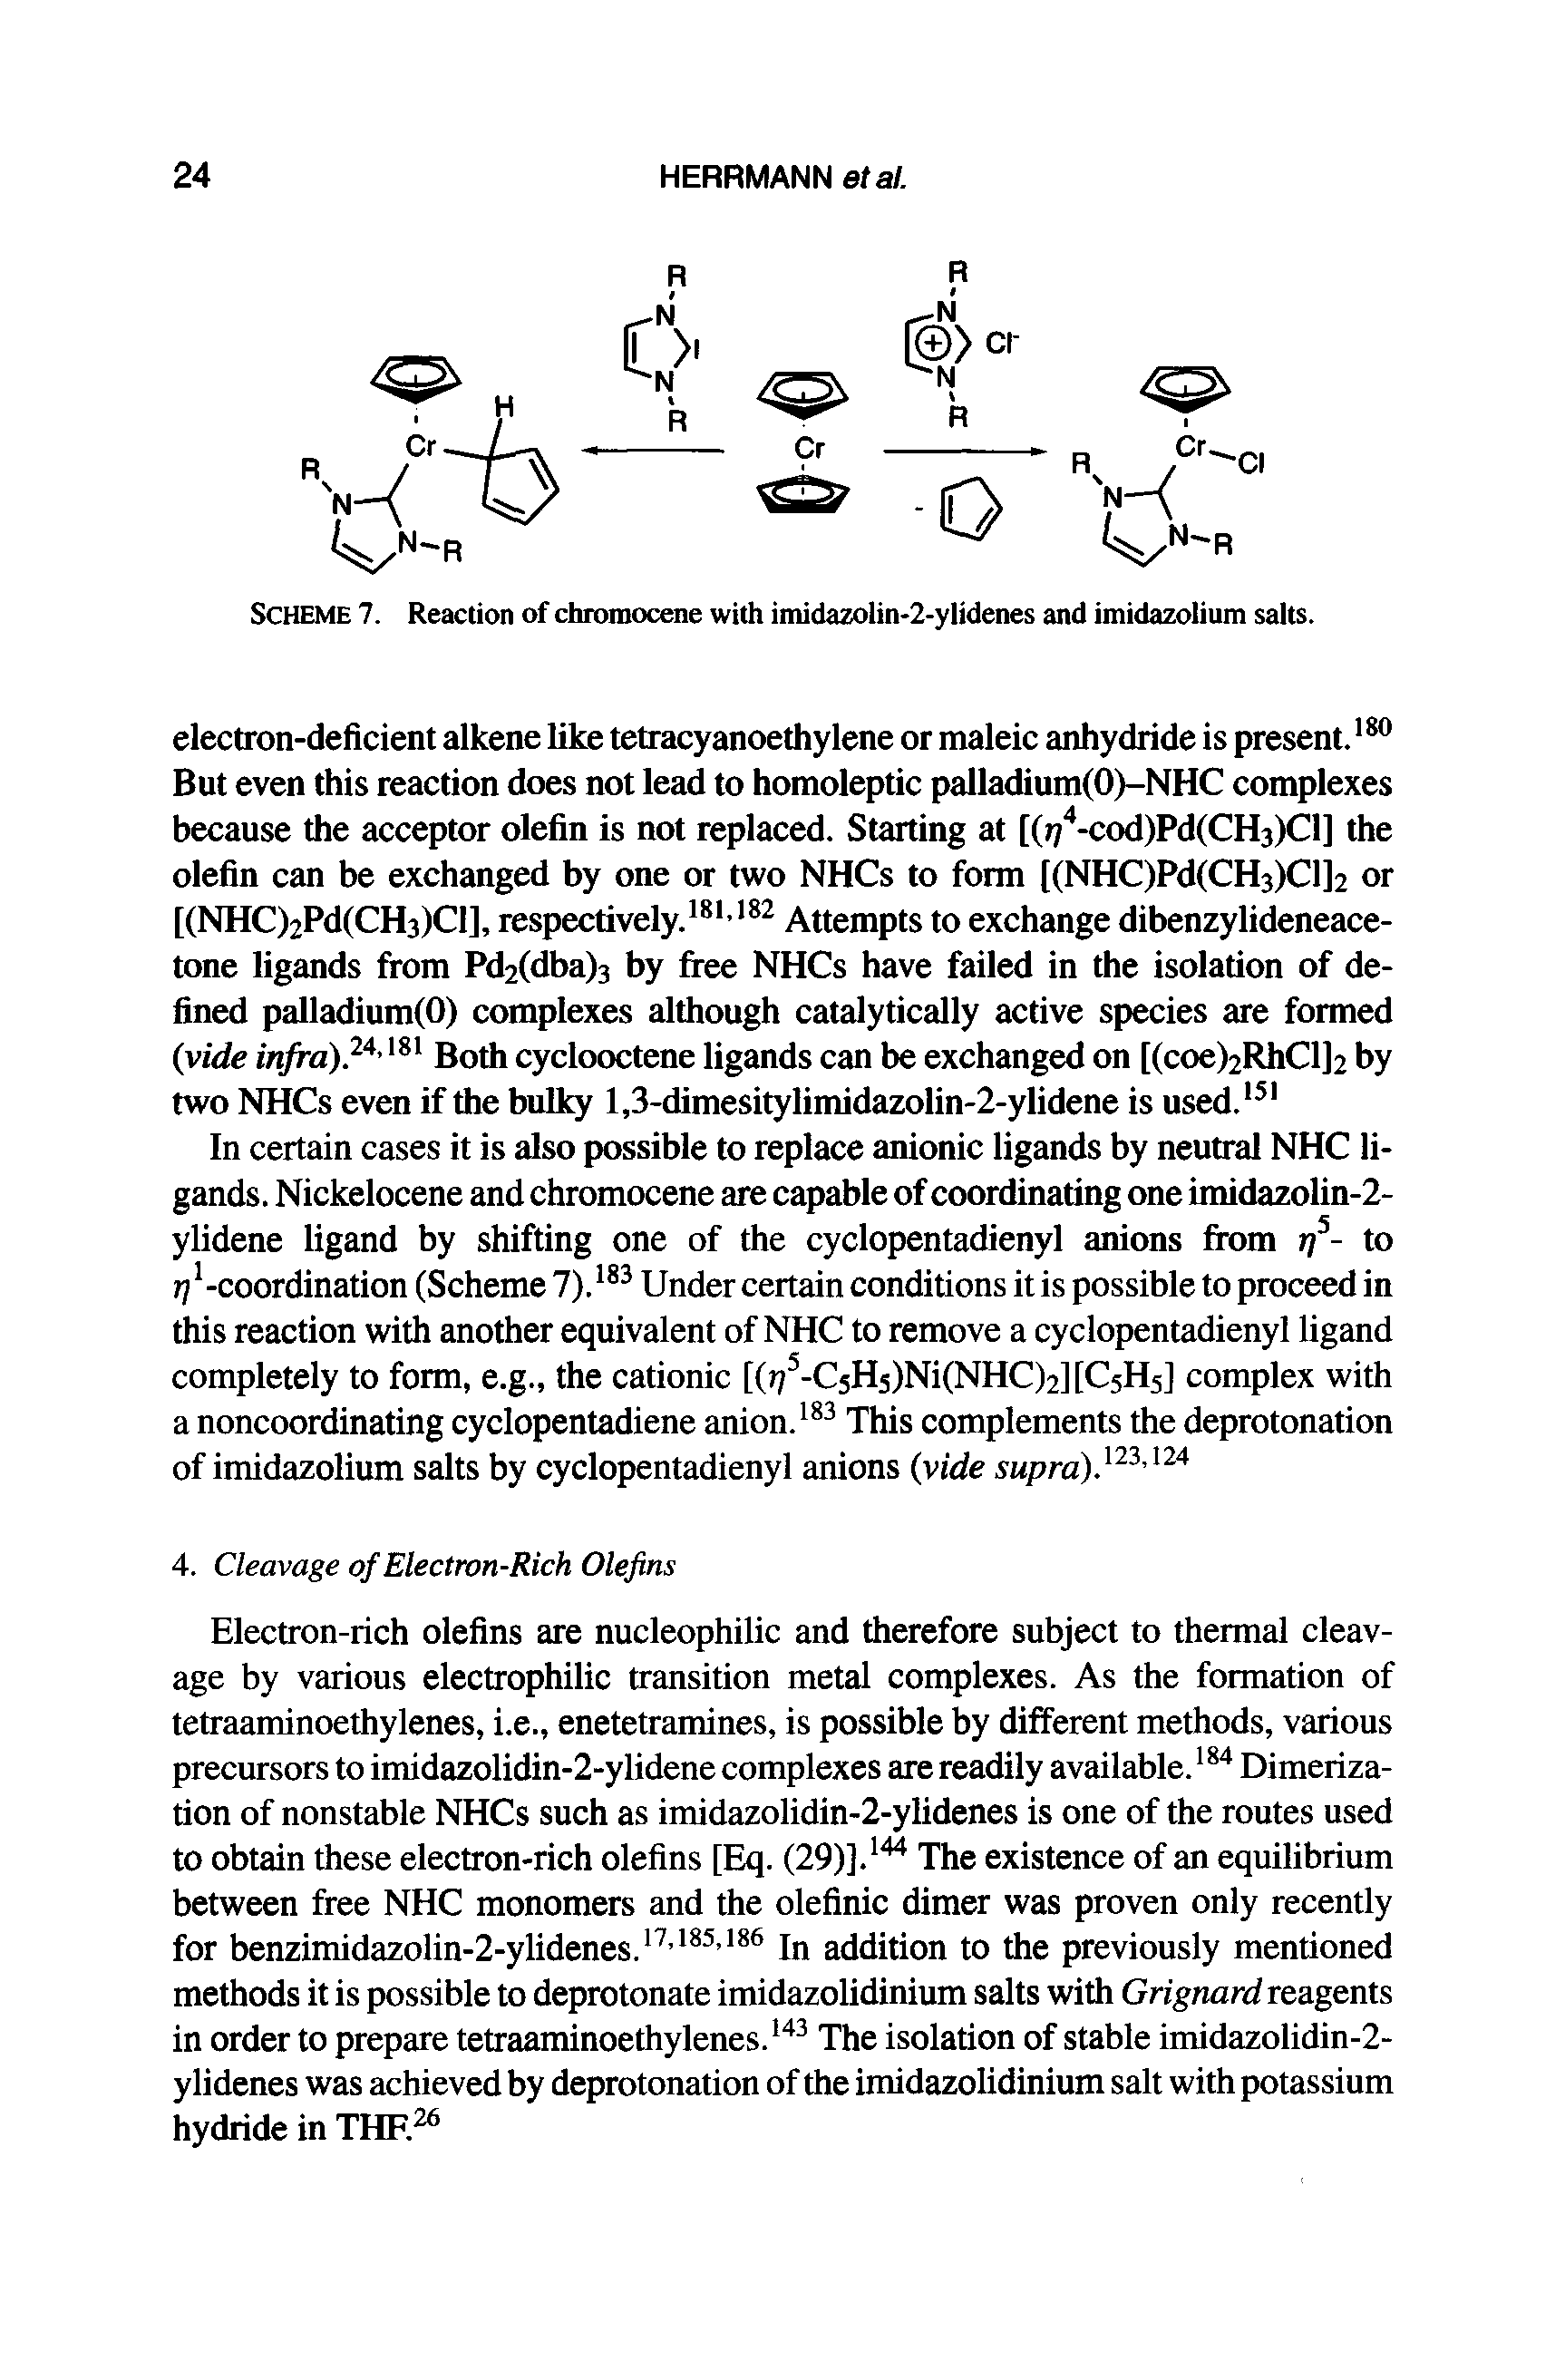 Scheme 7. Reaction of chromocene with imidazolin-2-ylidenes and imidazolium salts.